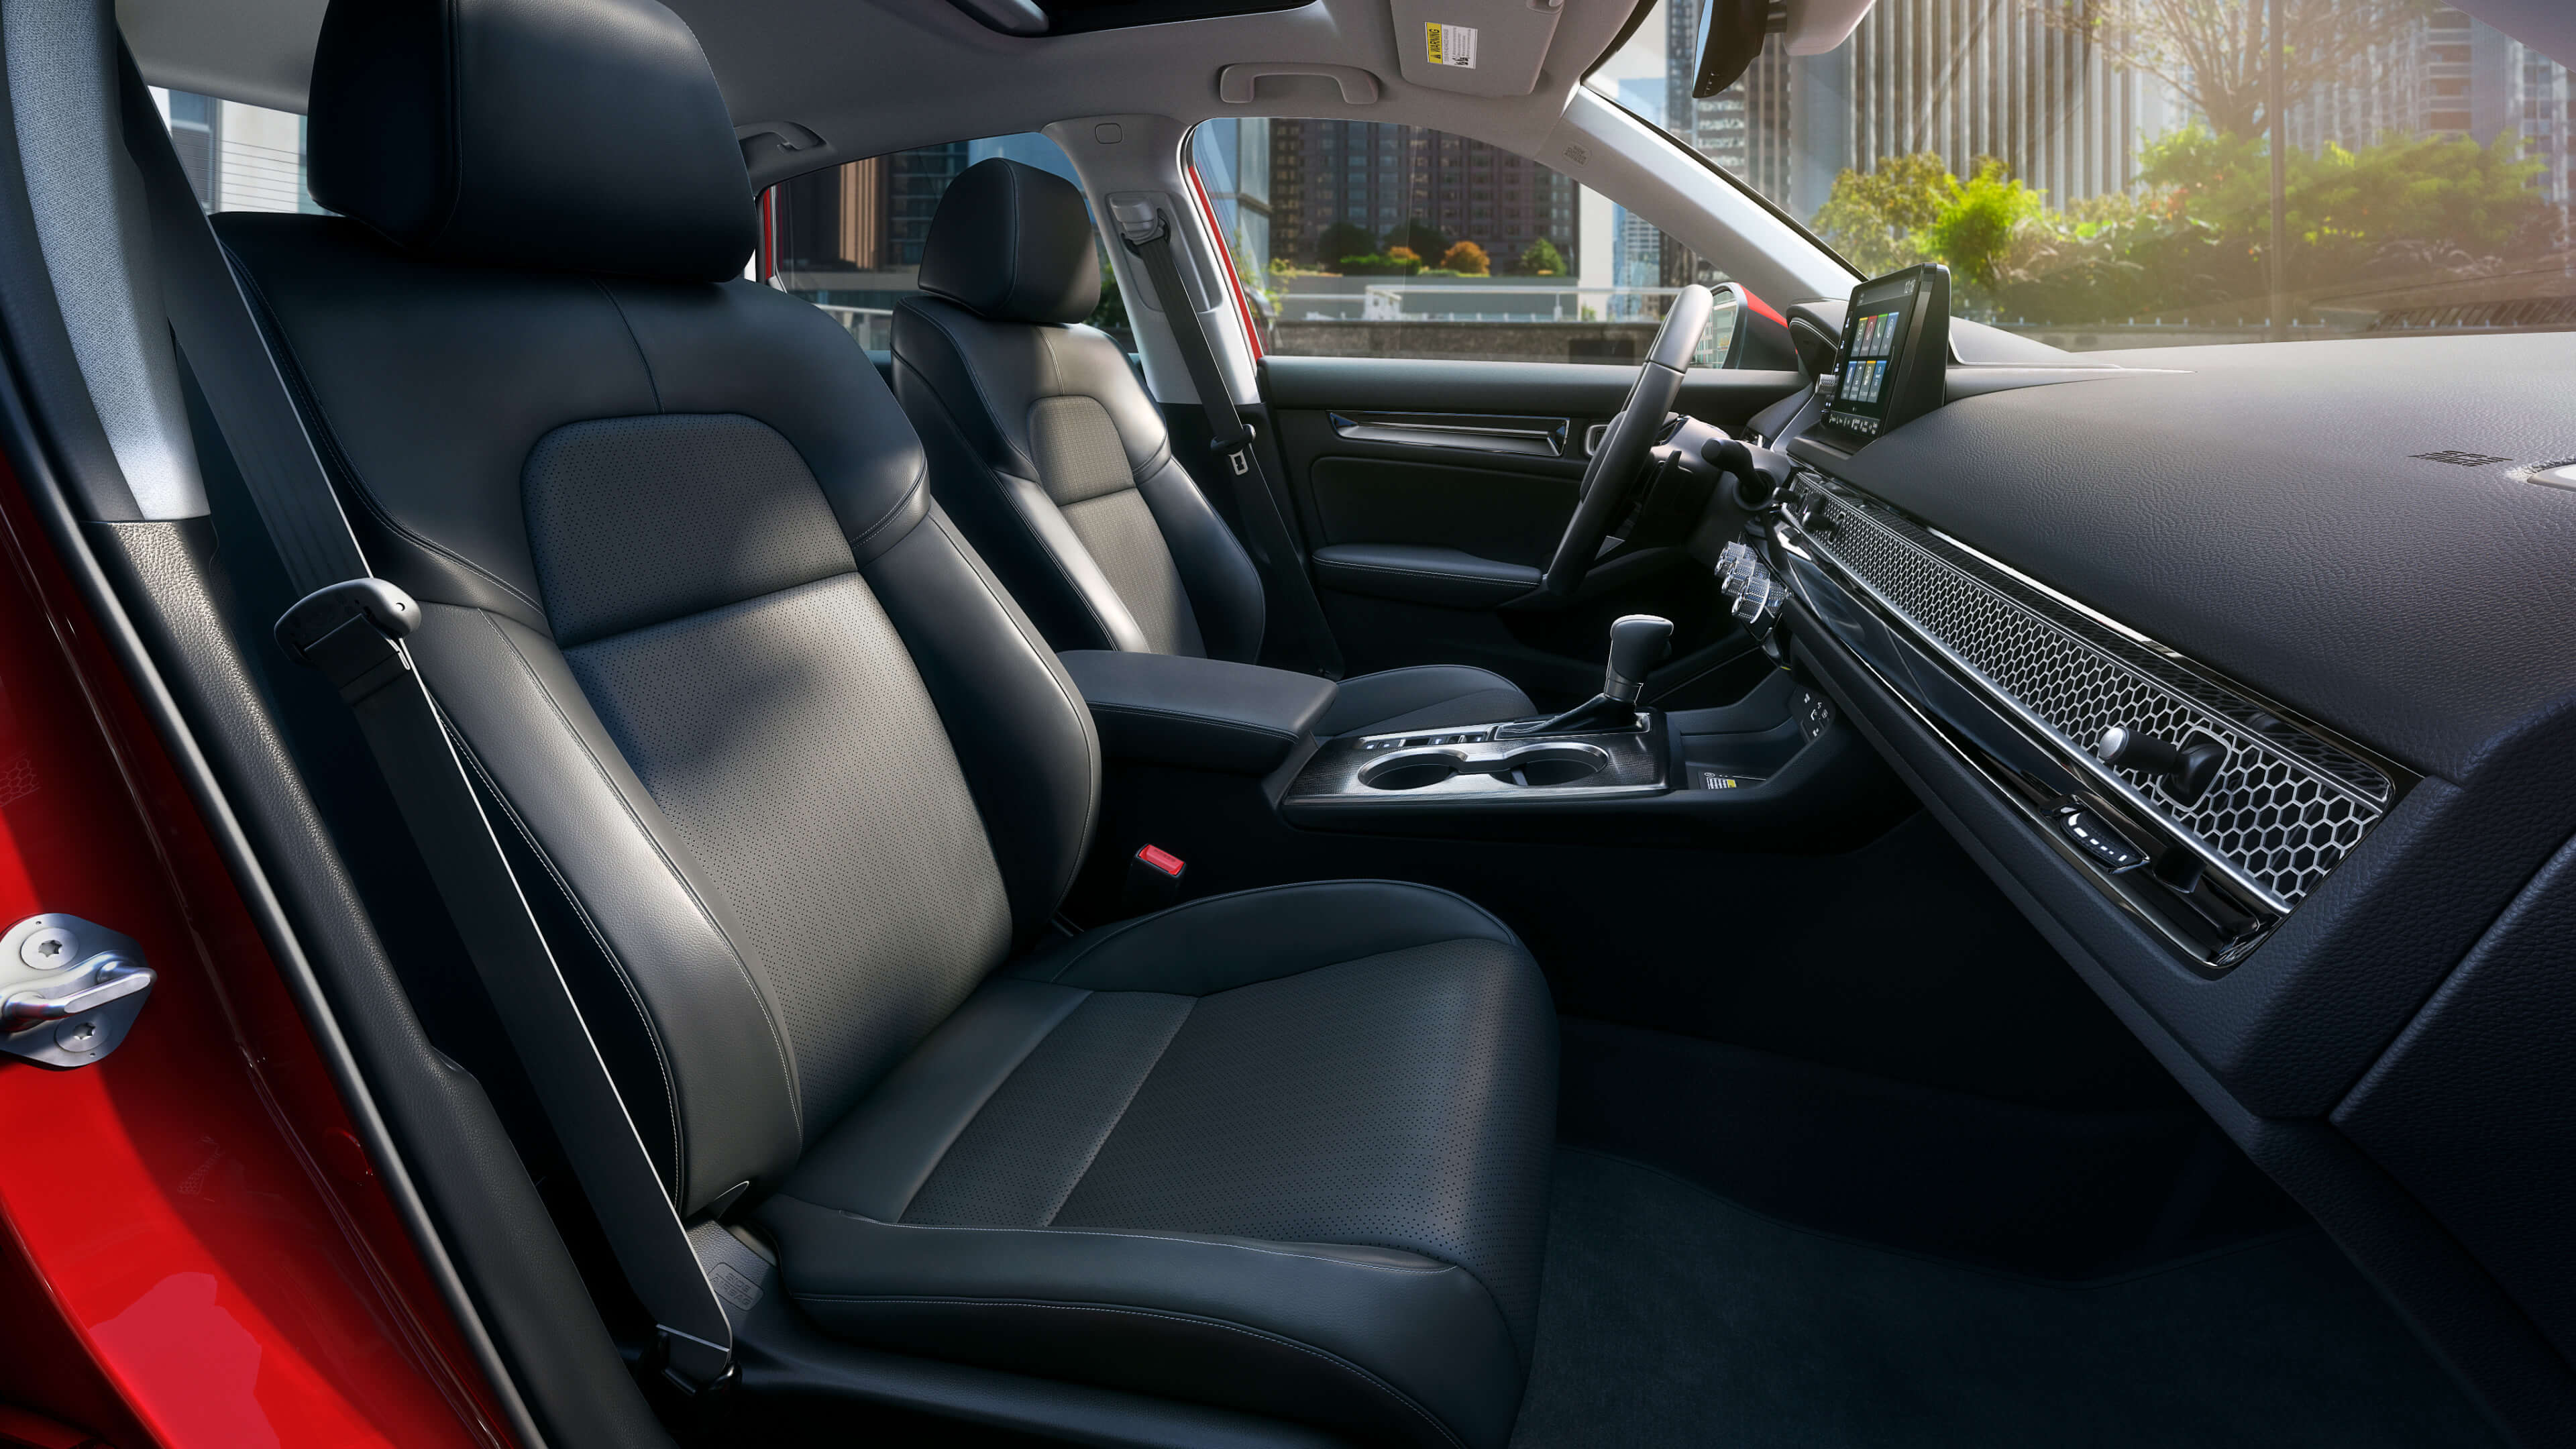 Interior Gallery | All-new 2022 Civic Sedan | Honda Canada